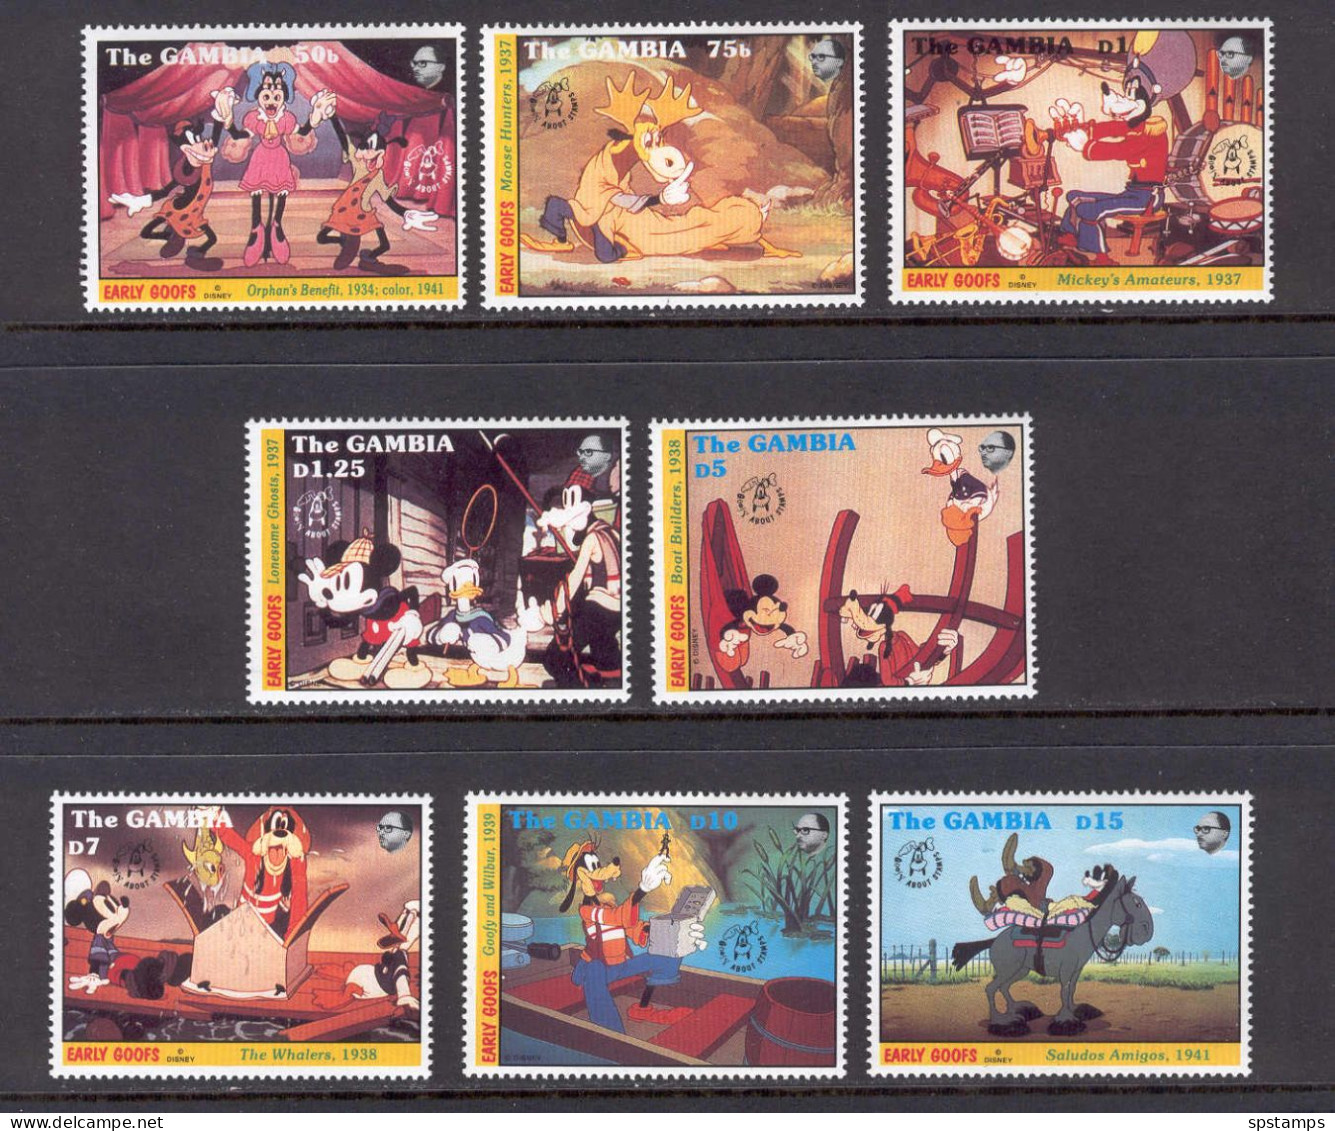 Disney Set Gambia 1992 Early Goofs MNH - Disney